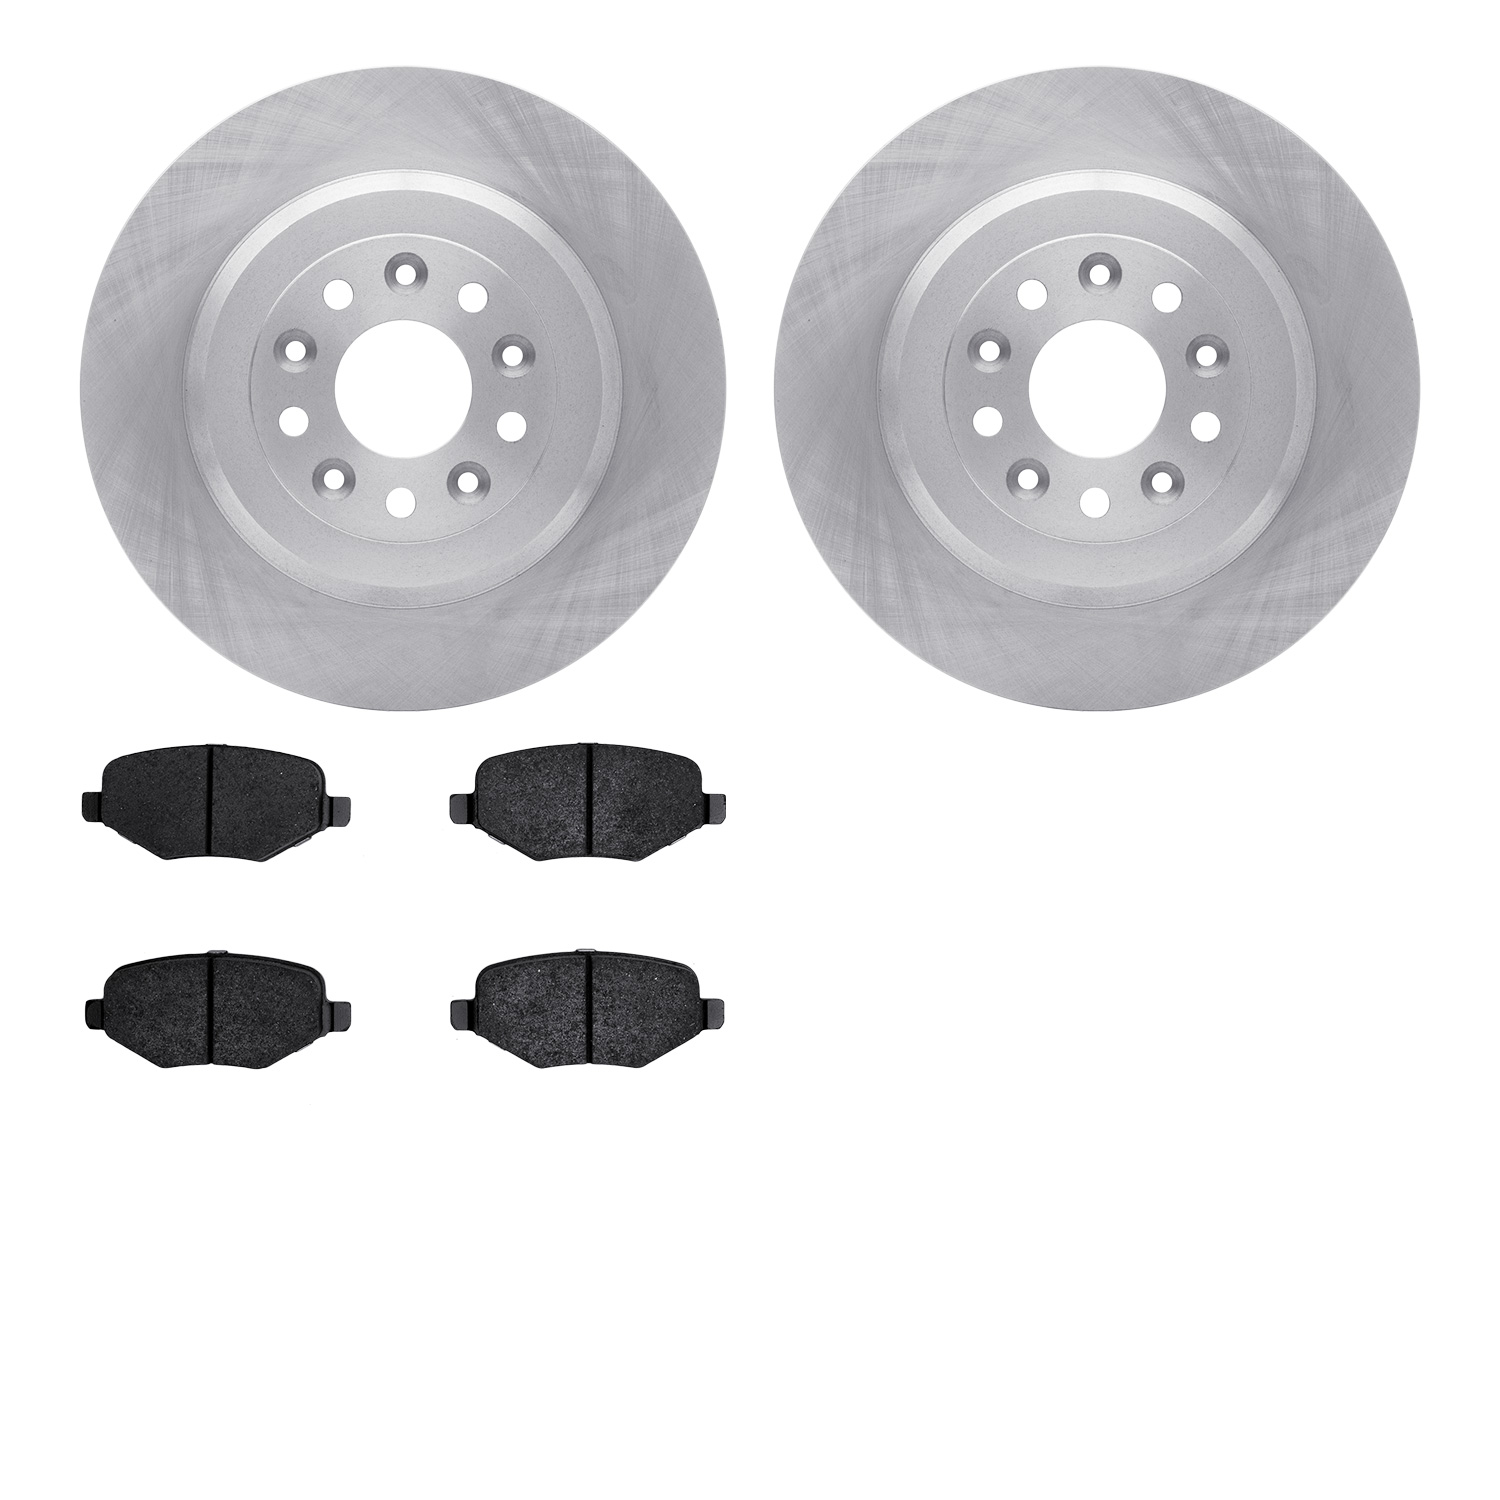 6302-54196 Brake Rotors with 3000-Series Ceramic Brake Pads Kit, 2009-2019 Ford/Lincoln/Mercury/Mazda, Position: Rear